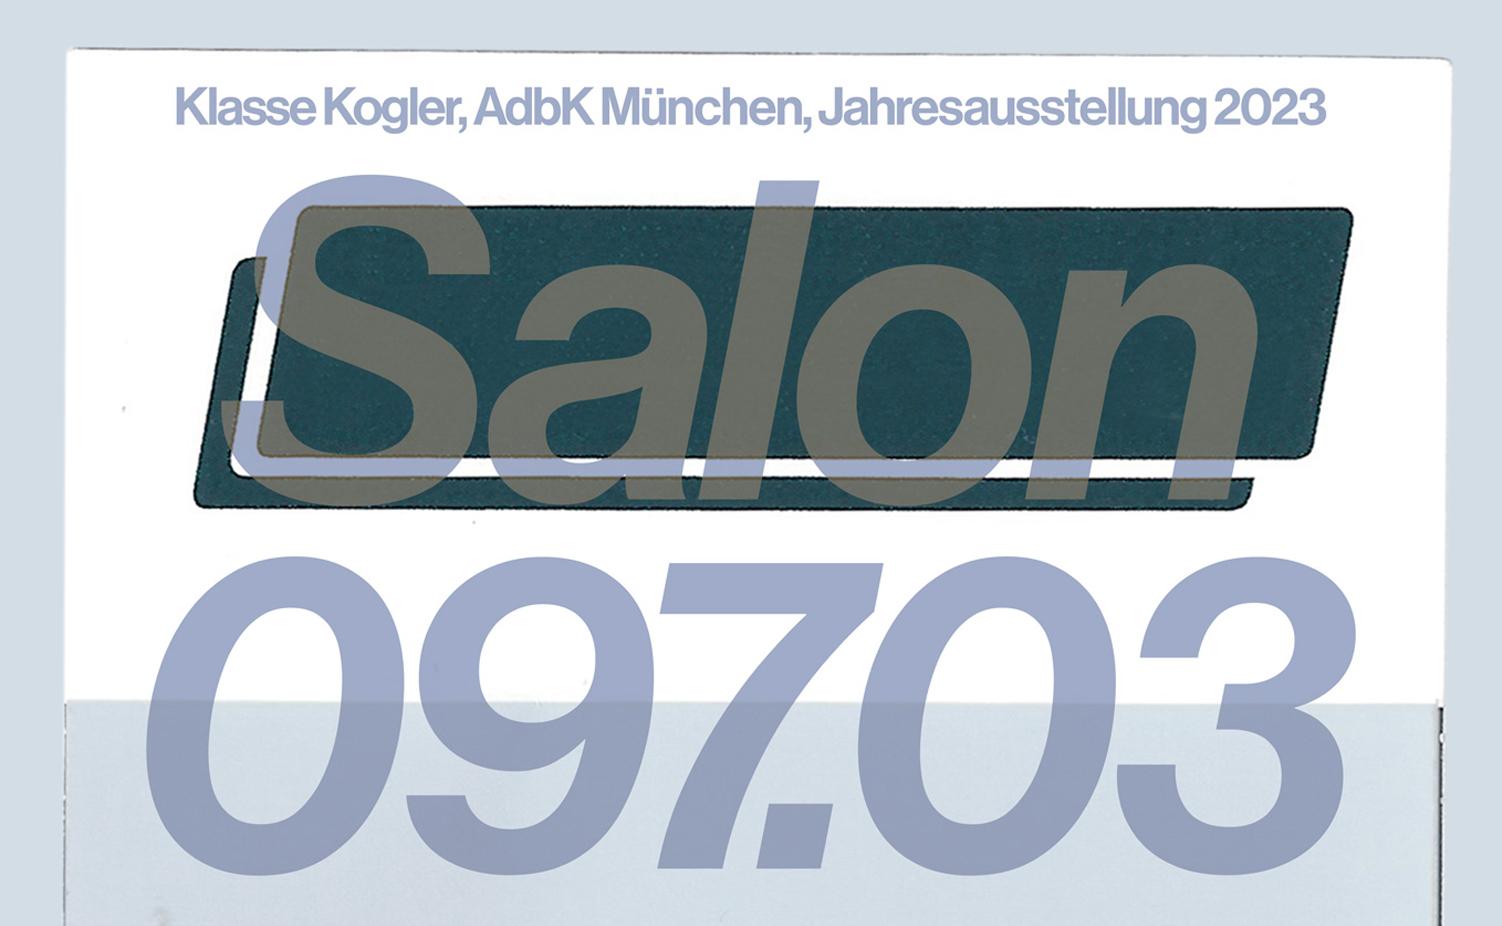 Klasse Kogler, Salon 097.03, Jahresausstellung 2023